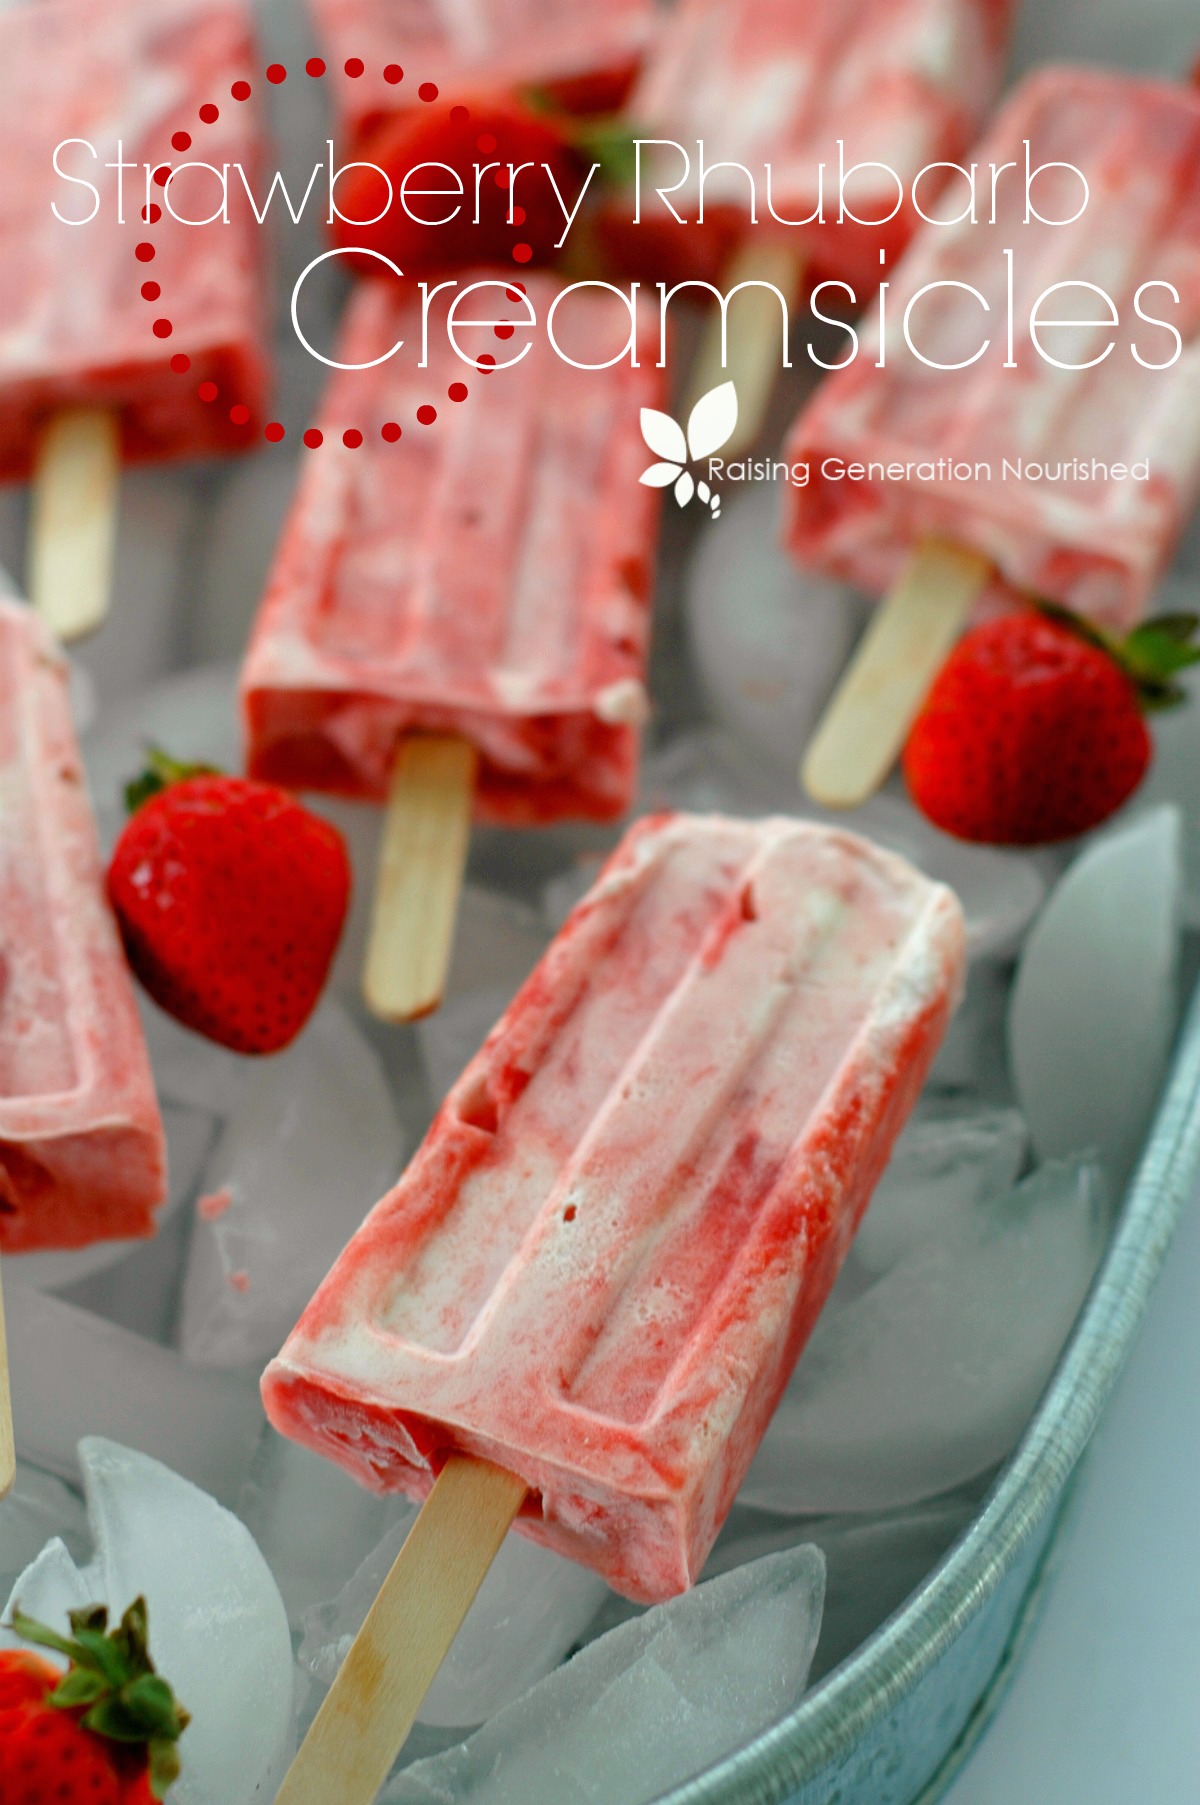 Strawberry Rhubarb Creamsicles